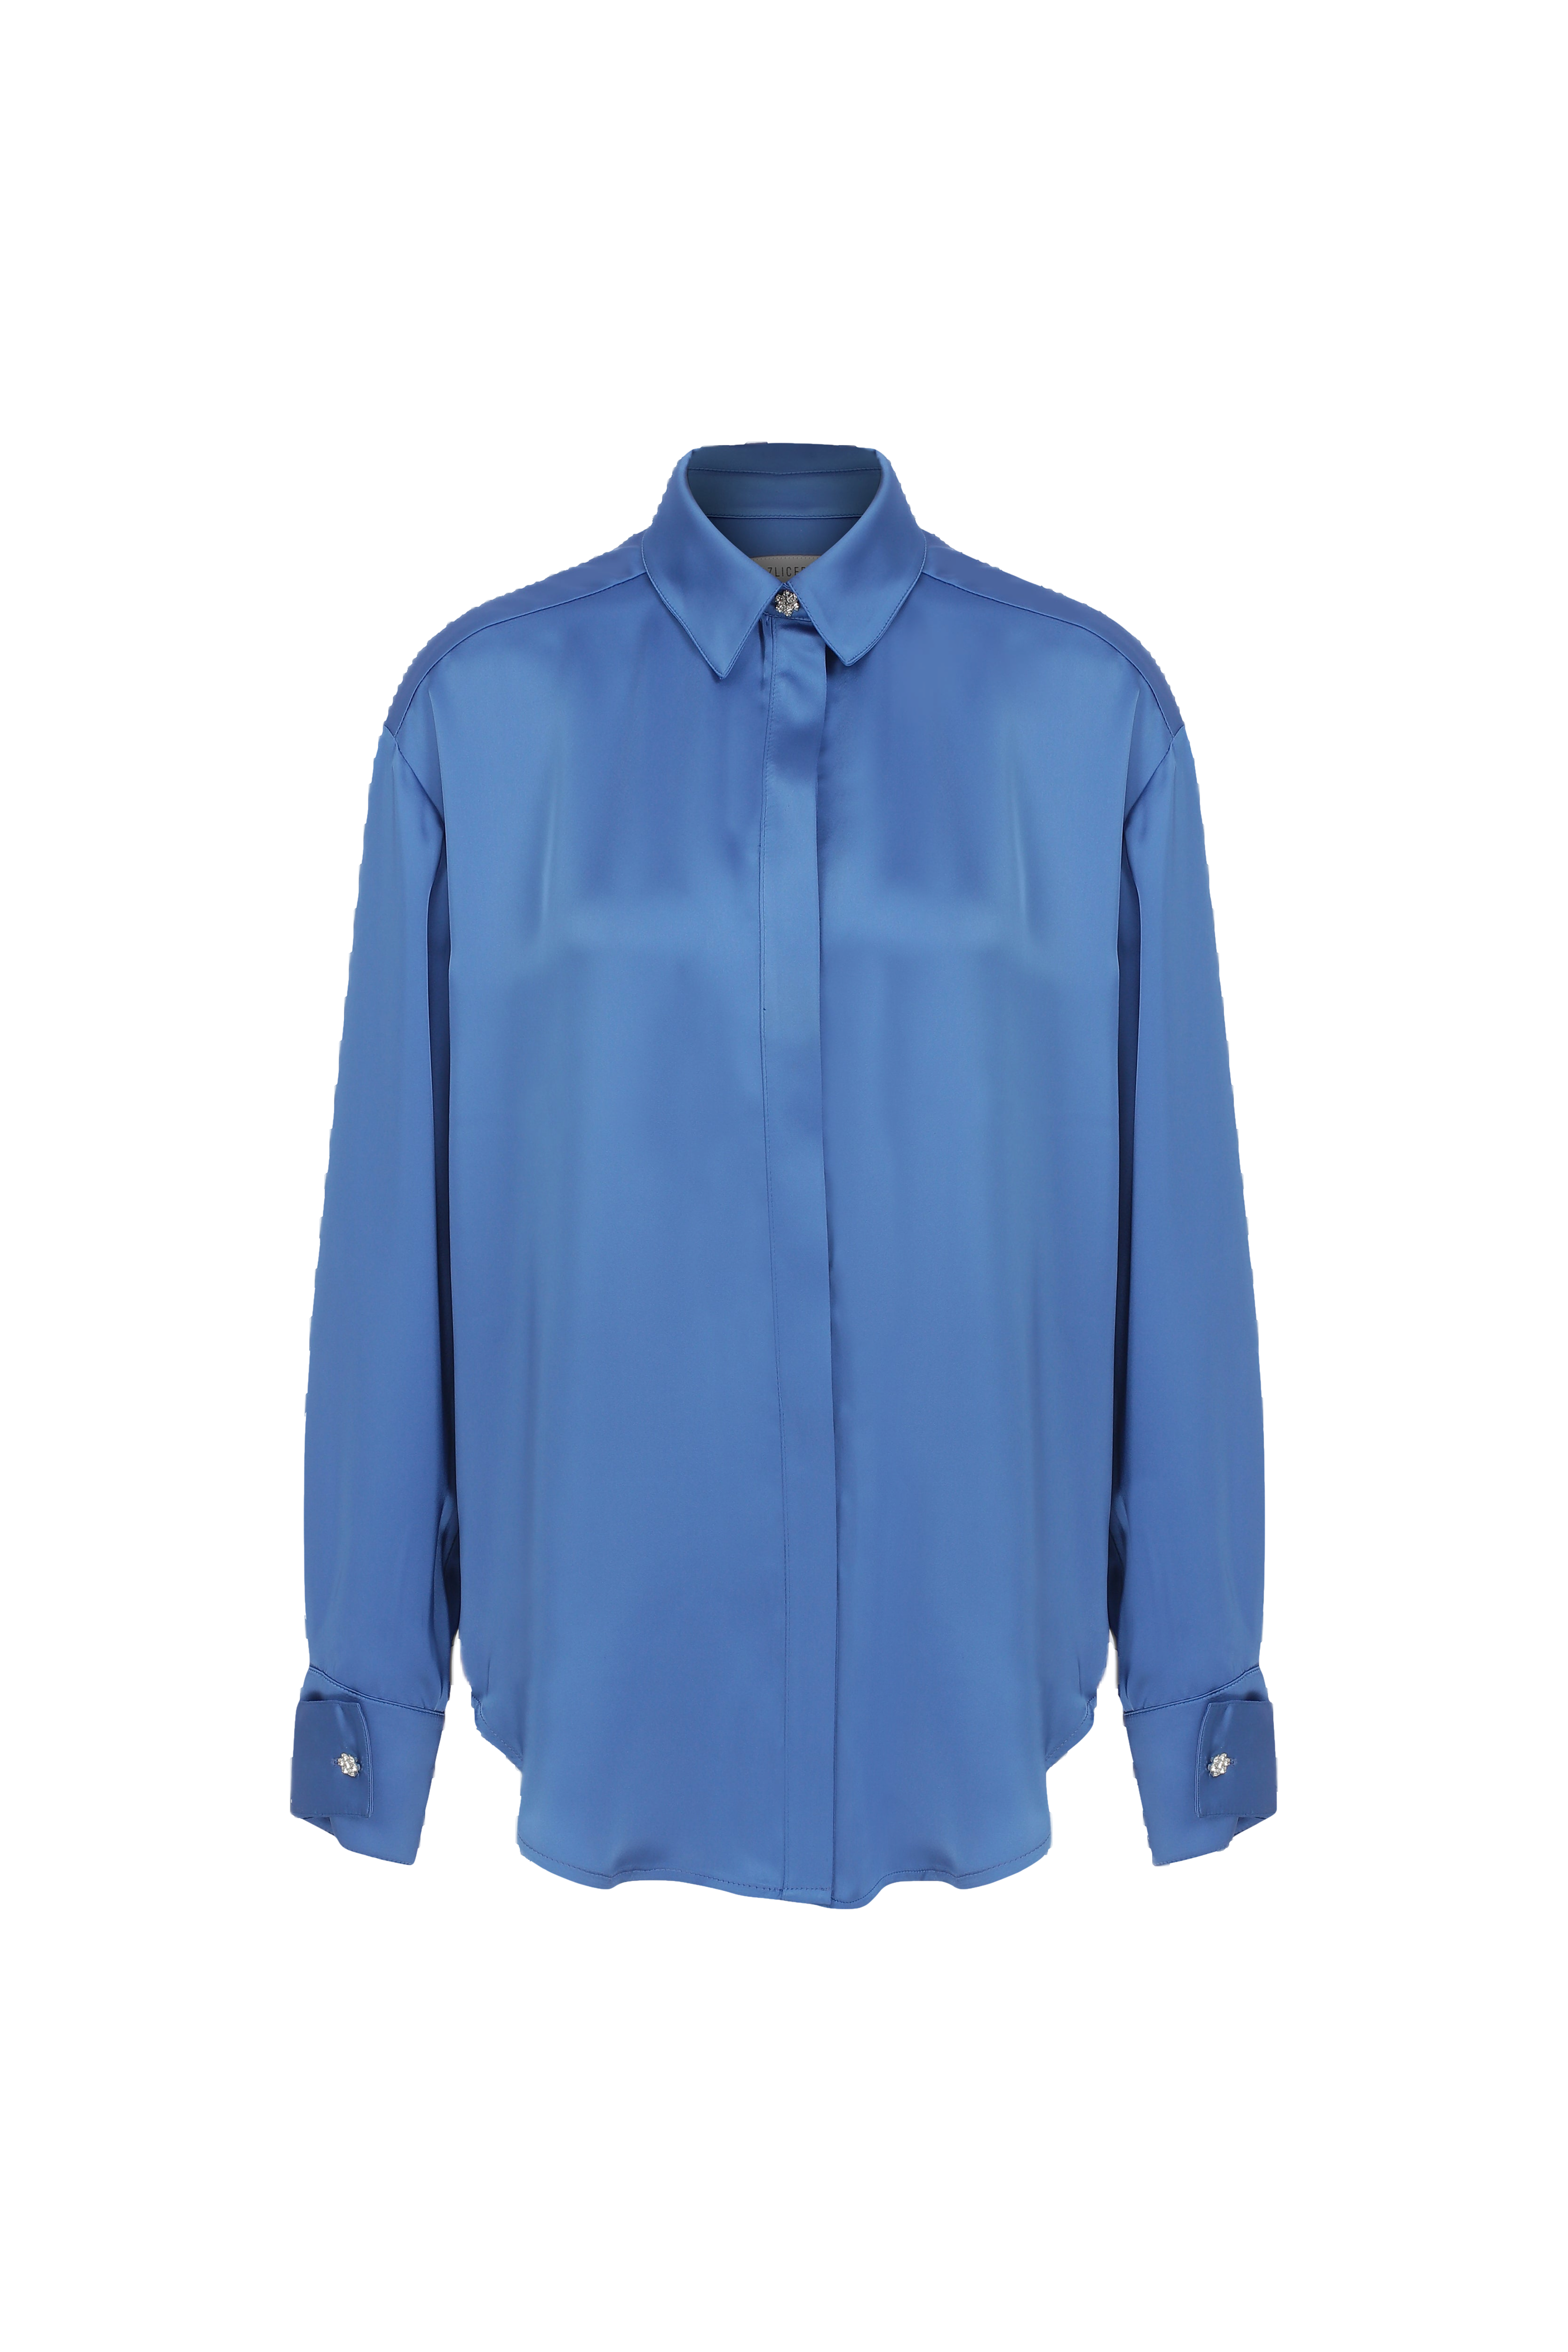 Nazli Ceren Ravenna Satin Shirt In French Blue